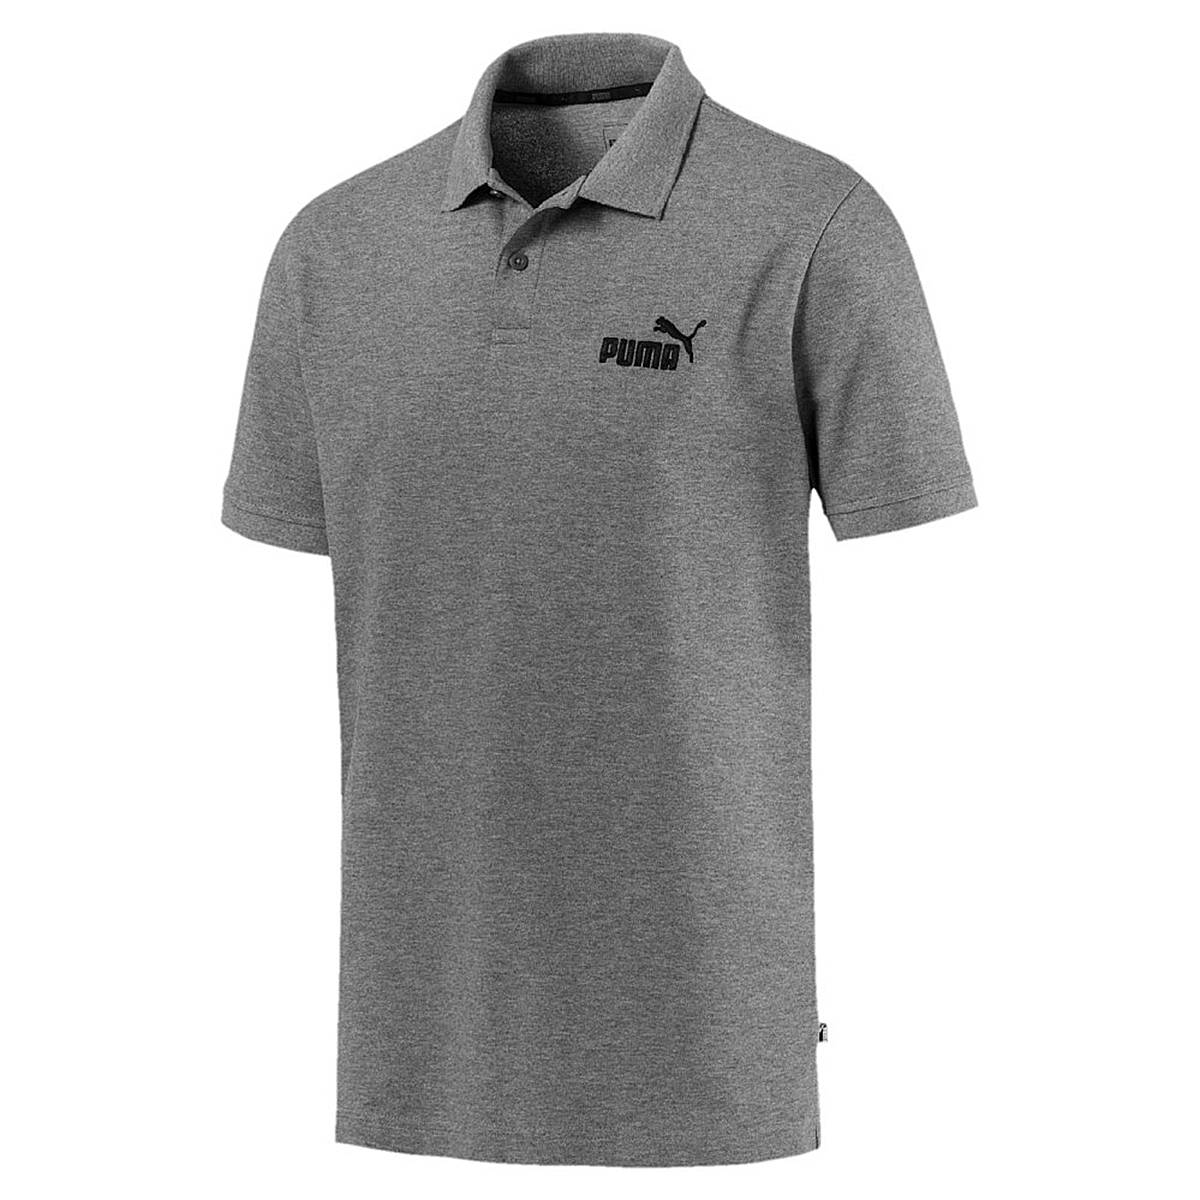 PUMA Herren Essential Pique Polo T-Shirt, Medium Gray Heather, L